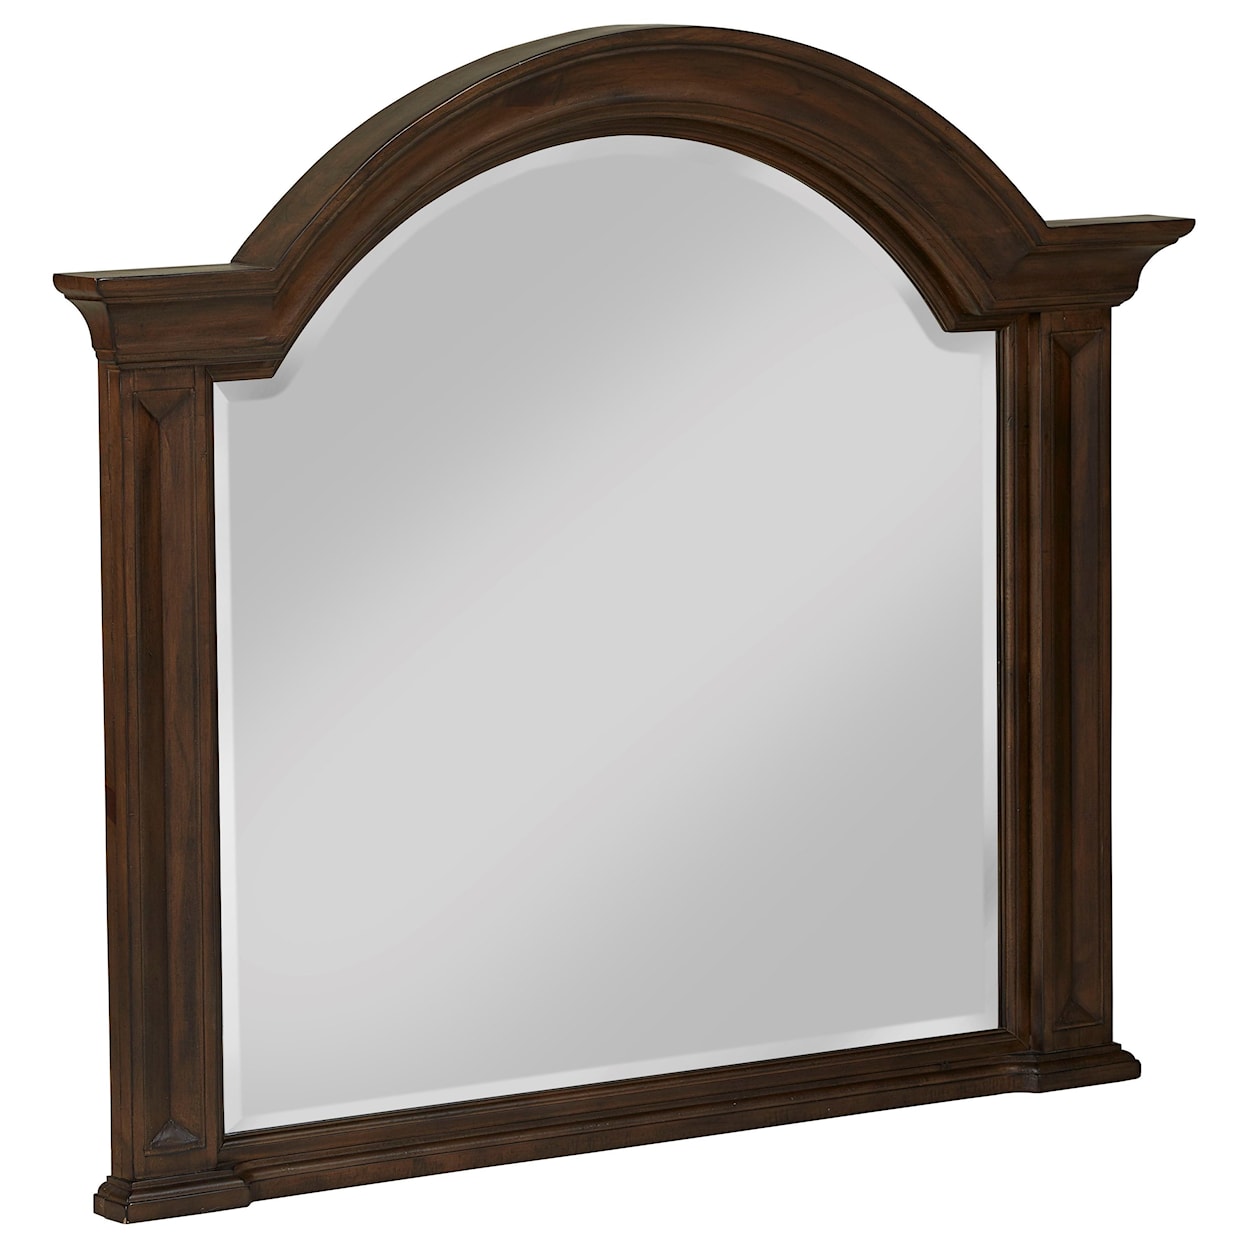 Modus International Colston Solid Wood Beveled Glass Mirror